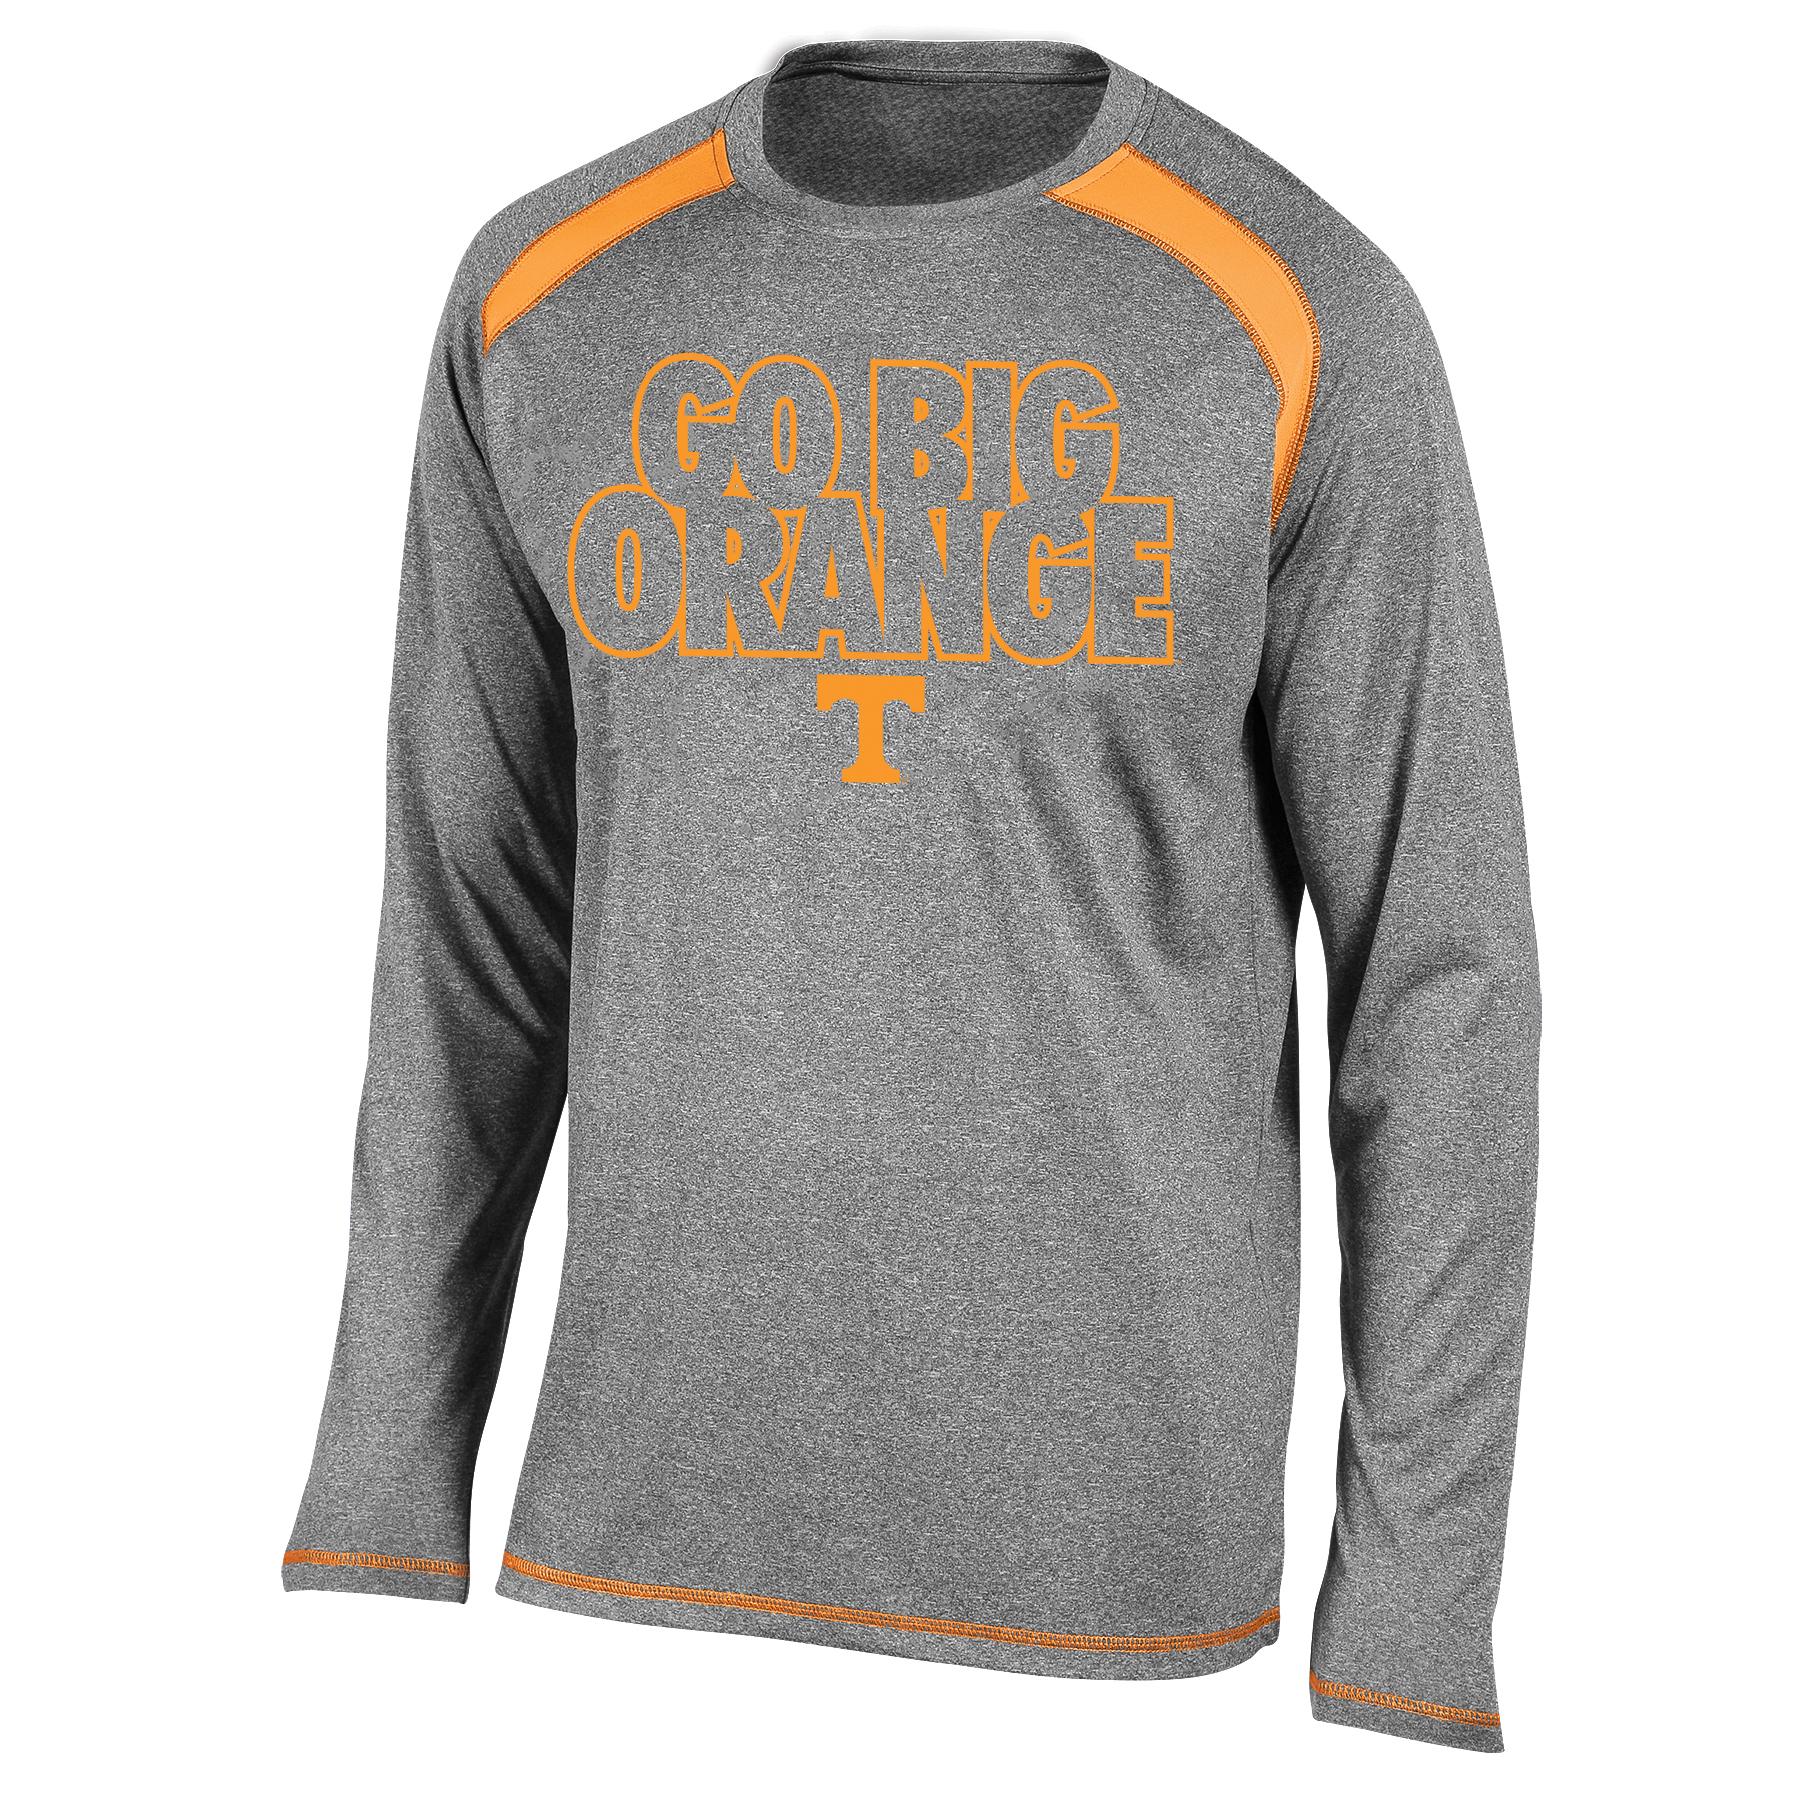 NCAA Men's Athletic Shirt - University of Tennessee Volunteers